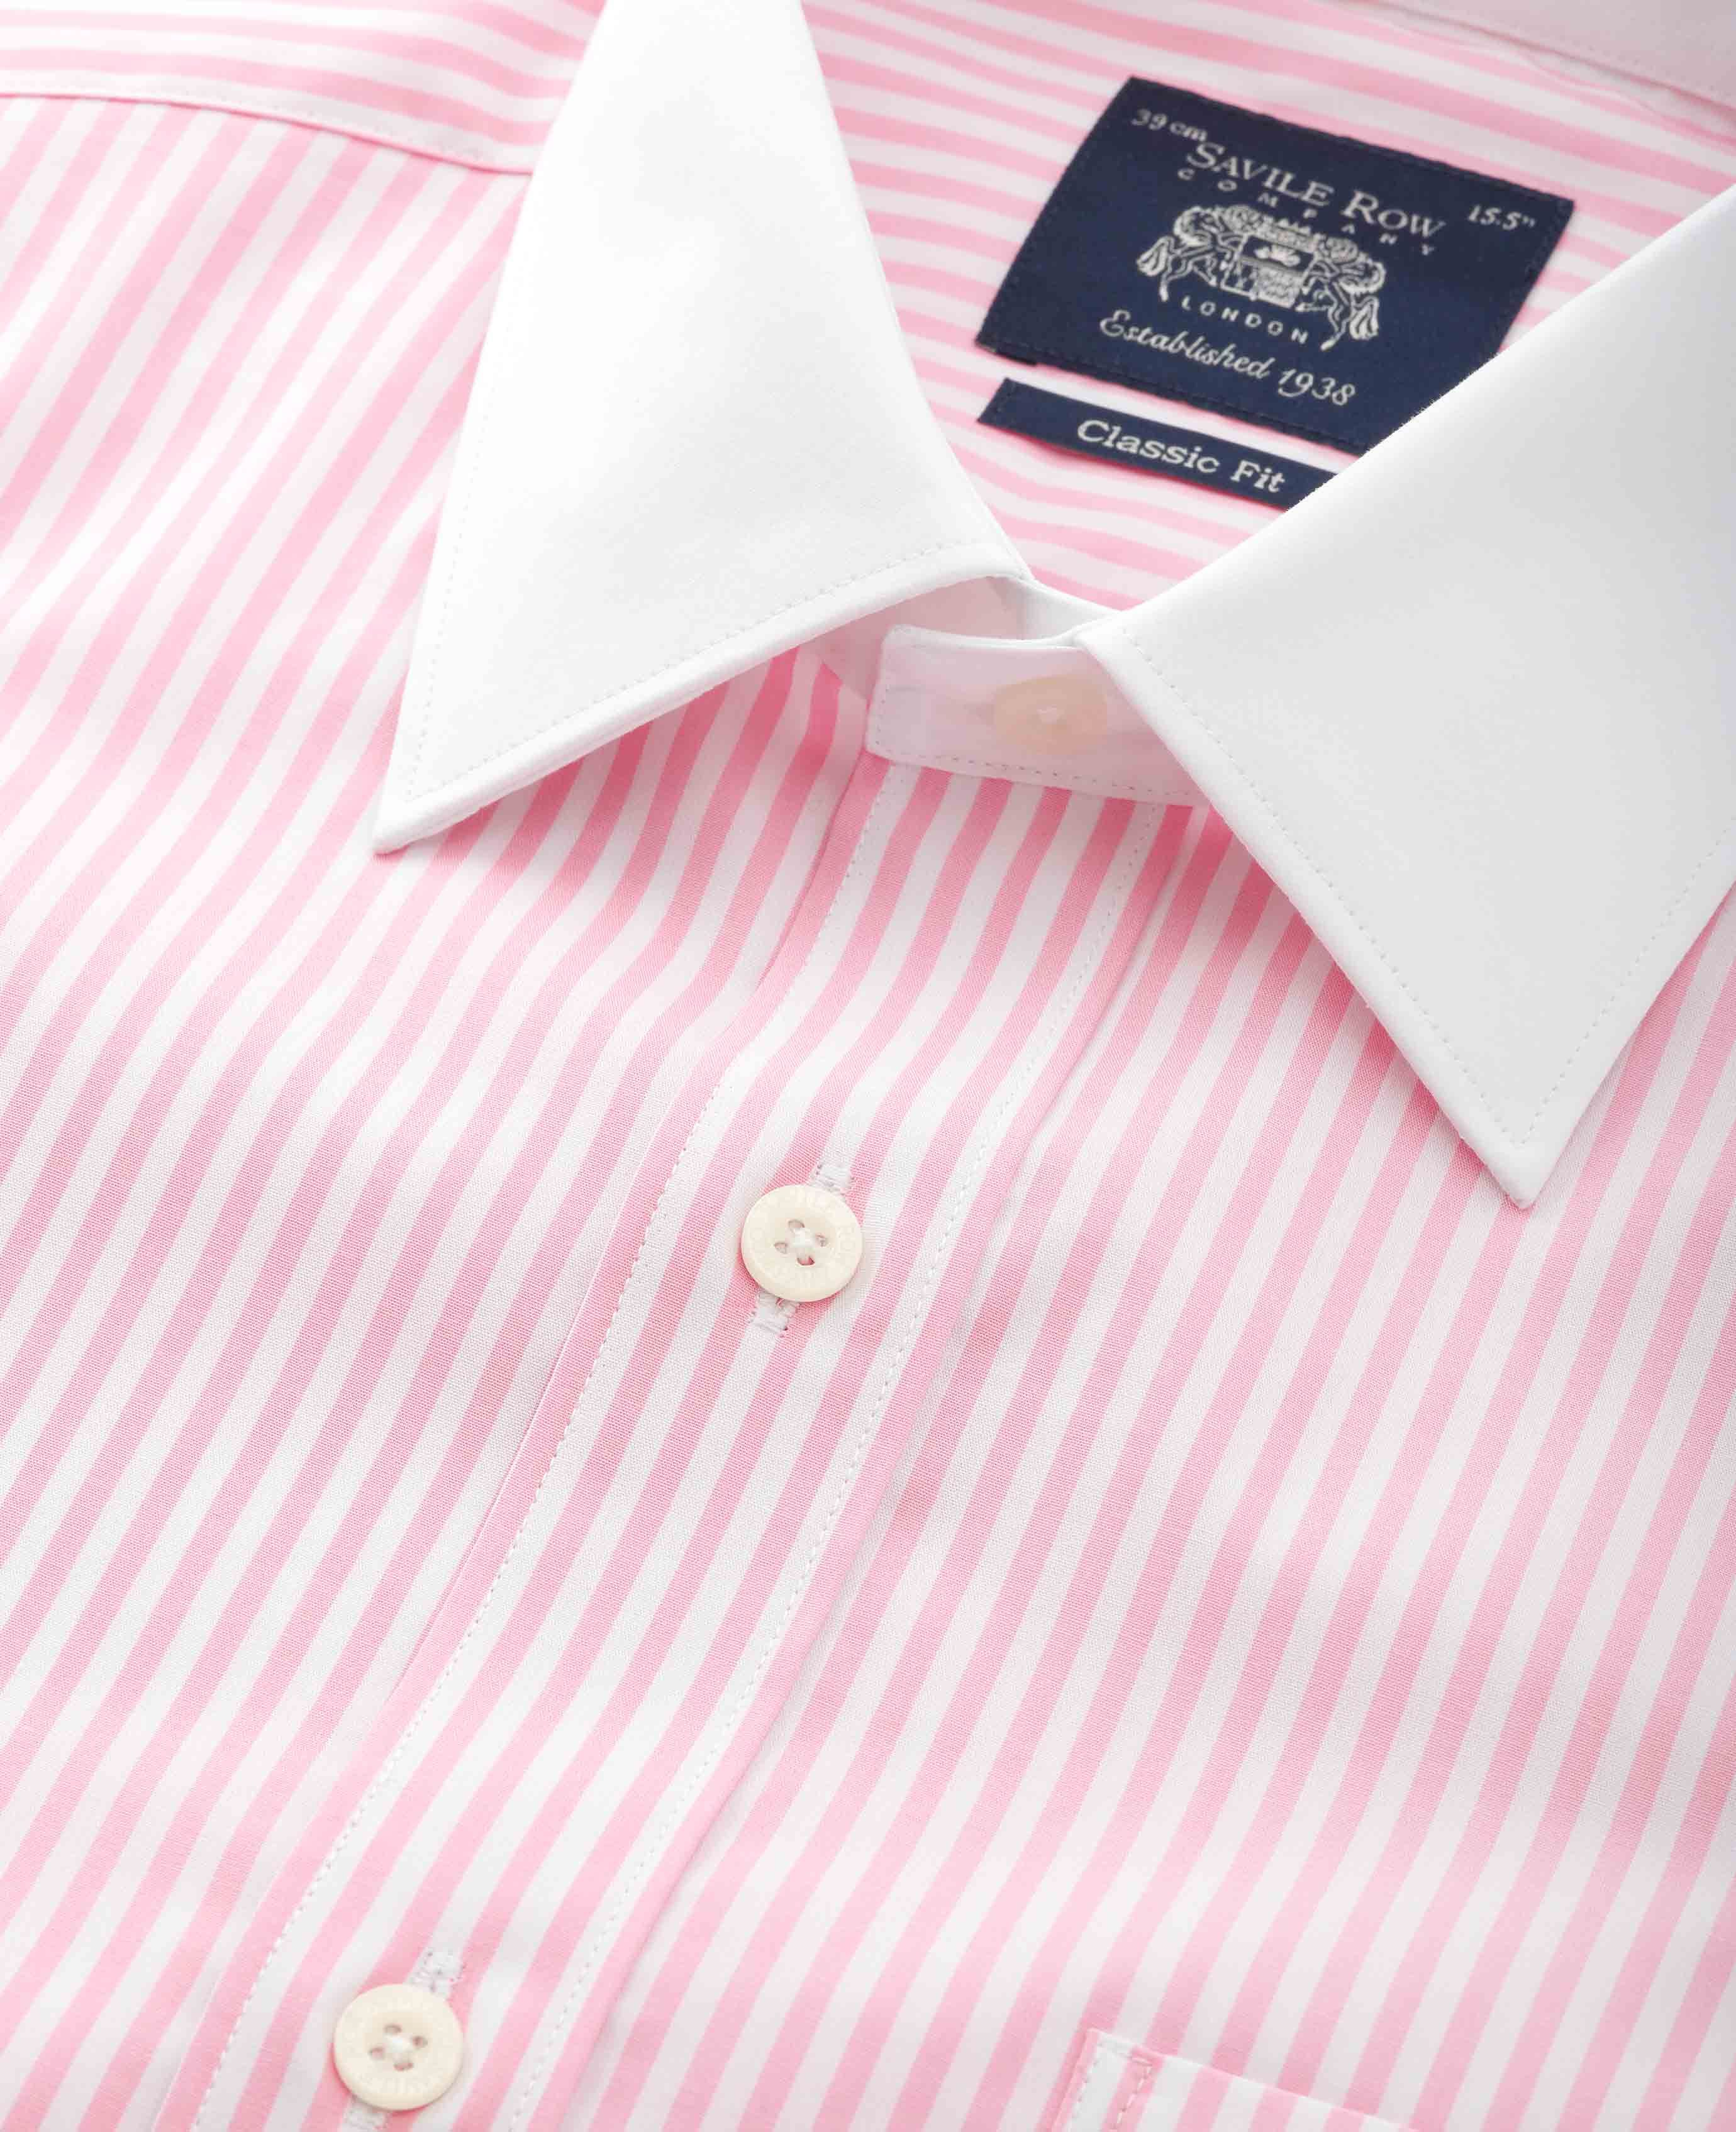 Thomas Pink Douall Stripe Slim Fit Double Cuff Shirt, $185